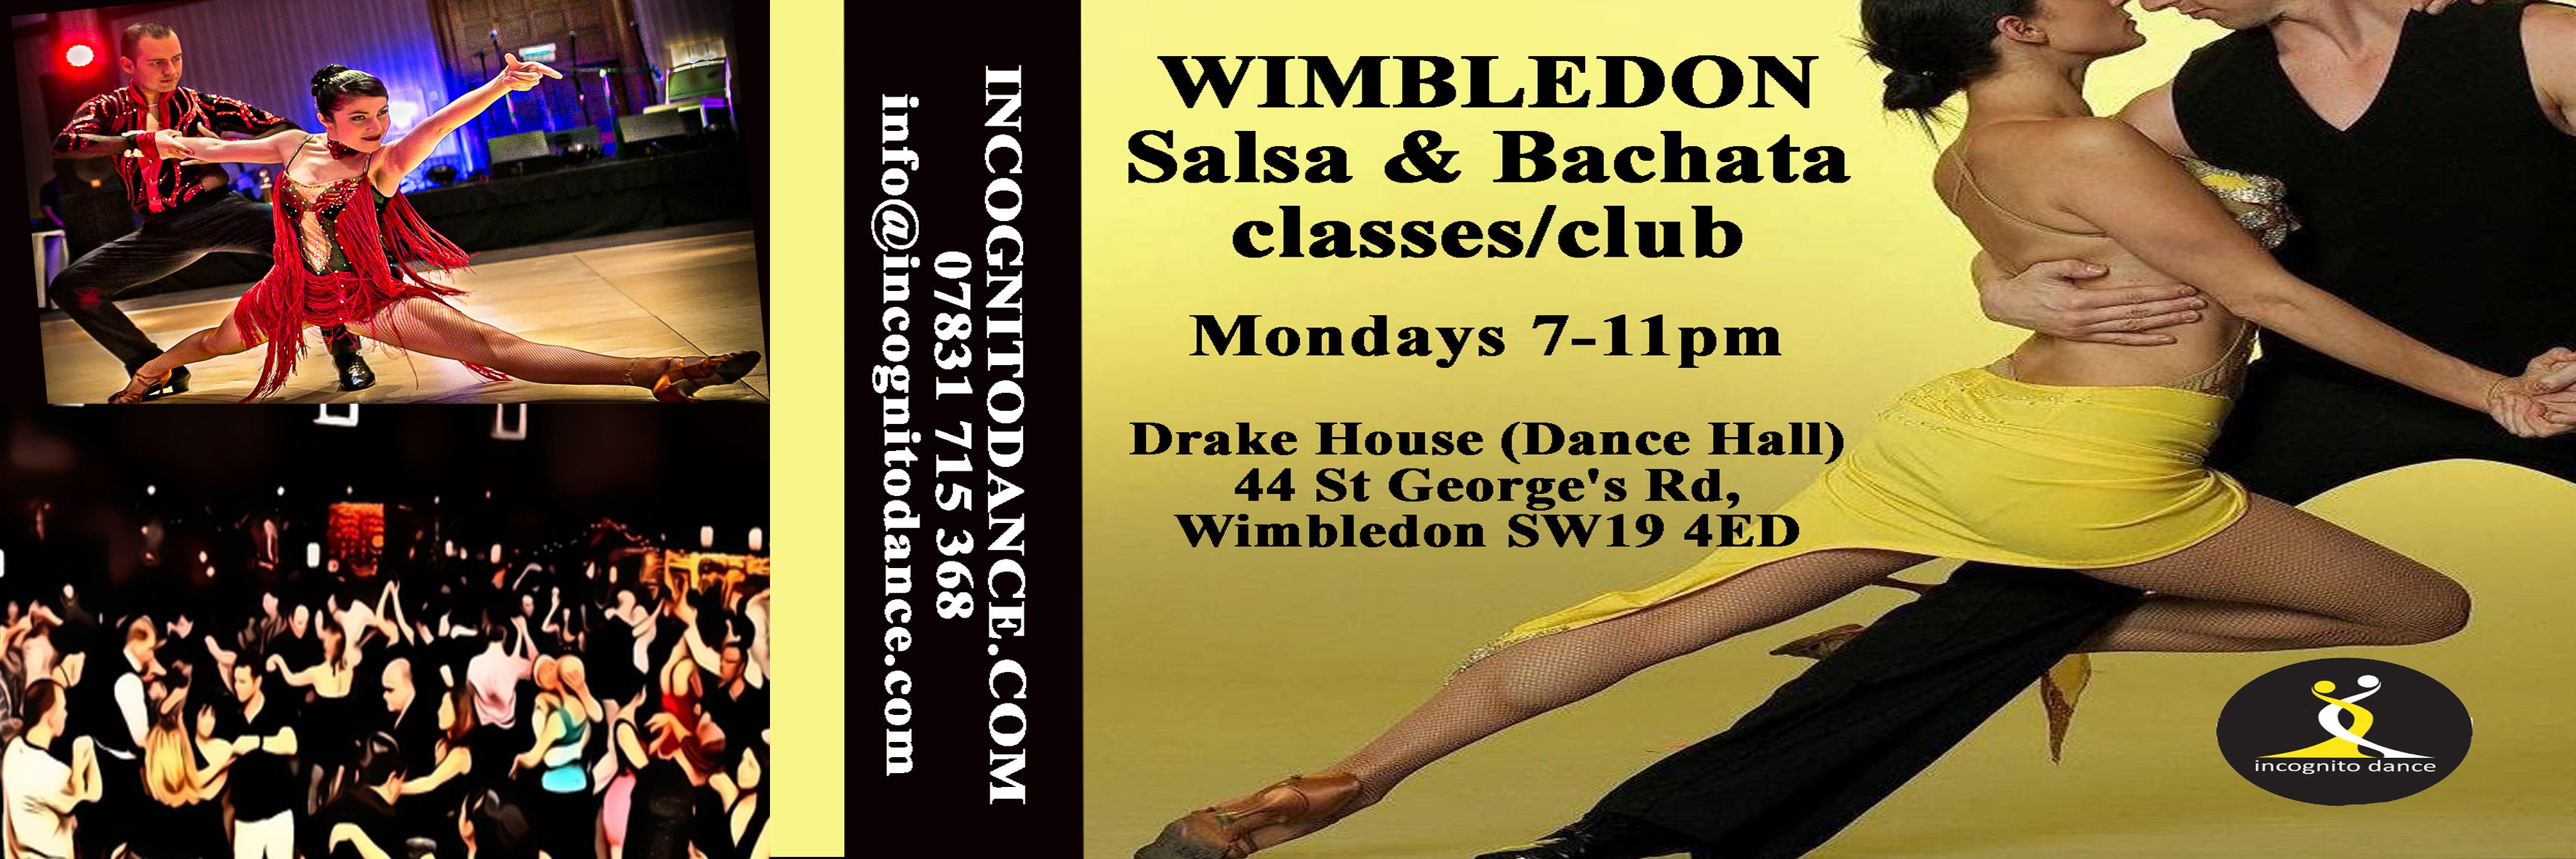 Salsa & Bachata Classes at The Wimbledon Club